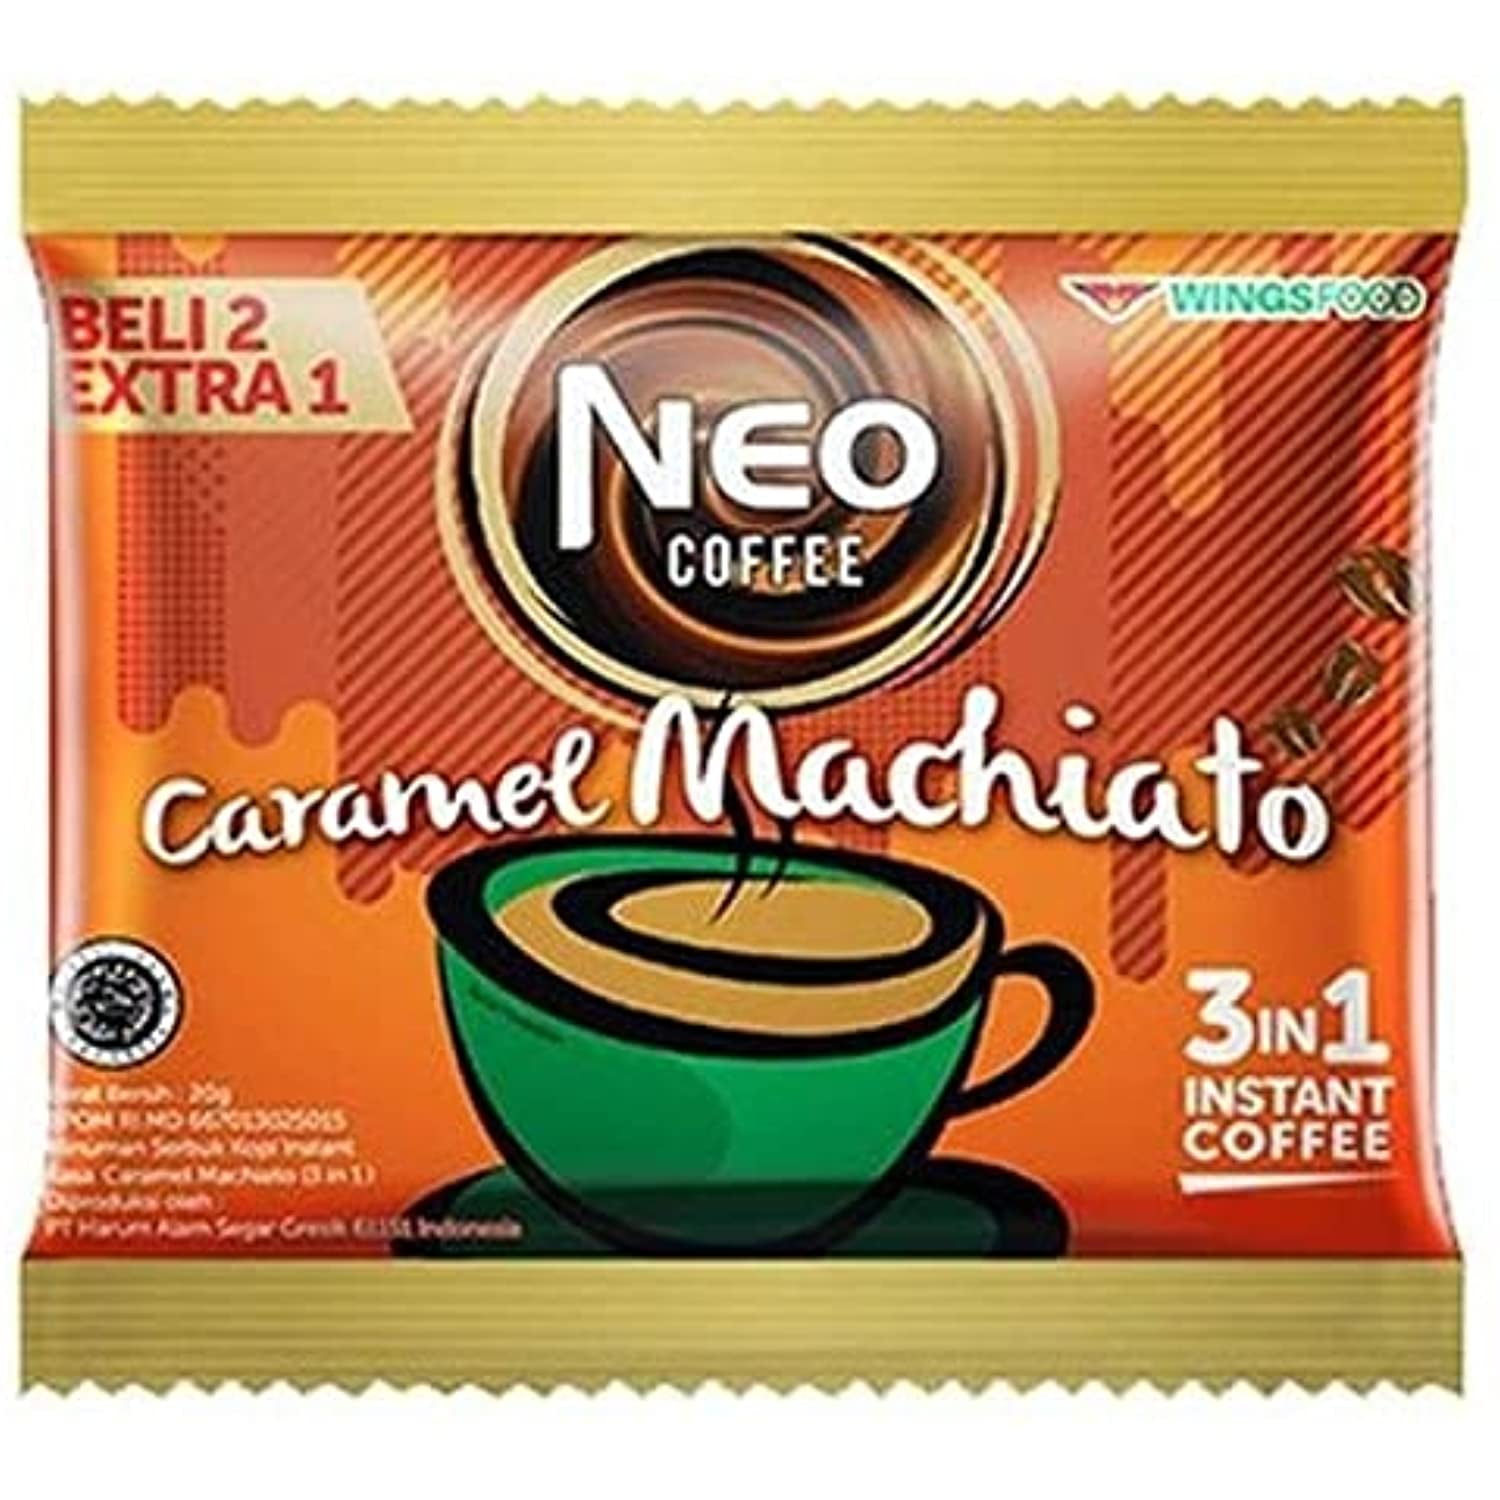 Café et thé Neo Par Dolce Gusto NEO Starbucks by NESCAFE Dolce Gusto  Caramel Macchiato - NEO SBX CARAMEL M.